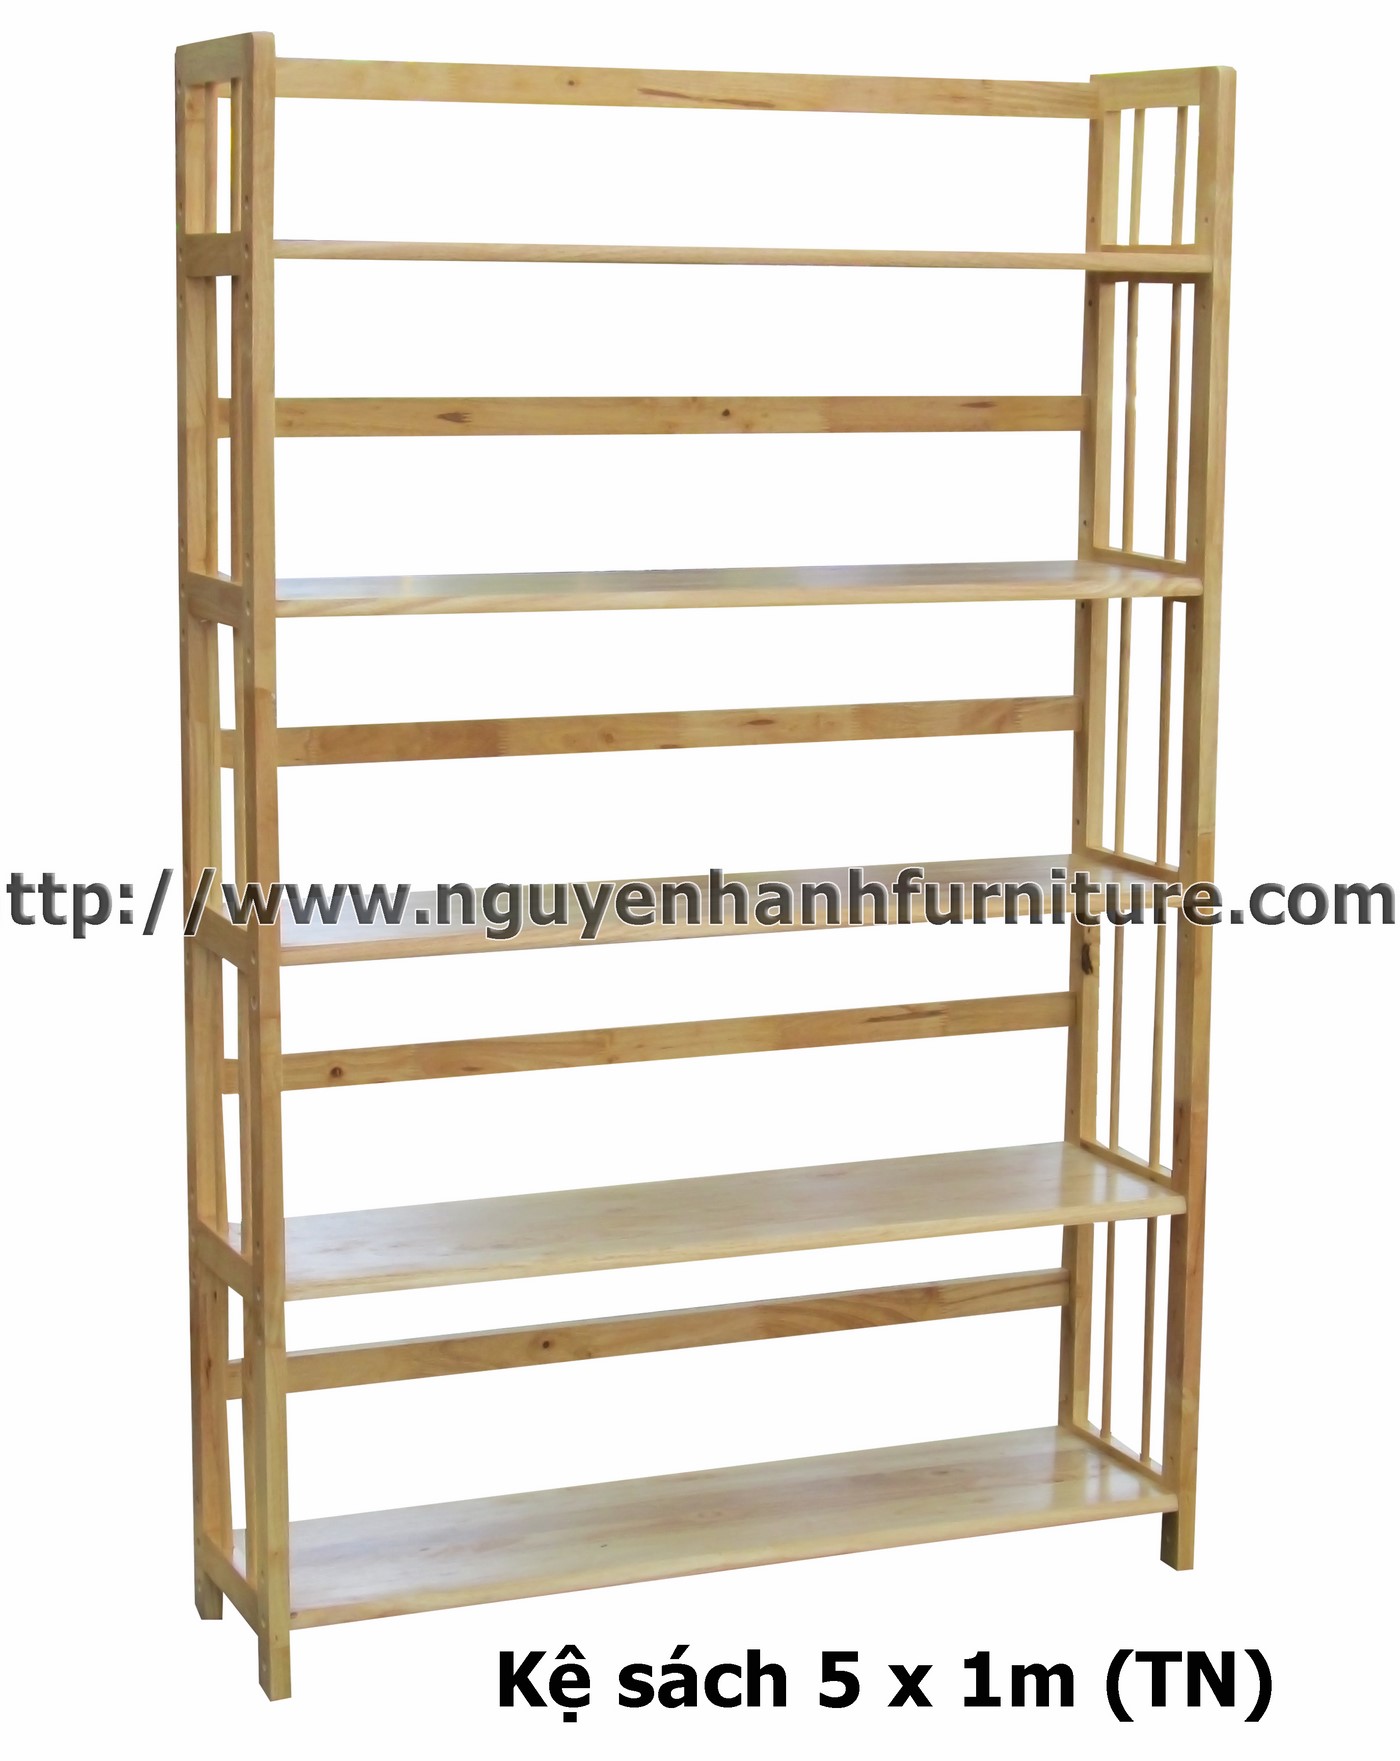 Name product: 5 storey Adjustable Bookshelf 100 (Natural) - Dimensions: 100 x 28 x 157 (H) - Description: Wood natural rubber